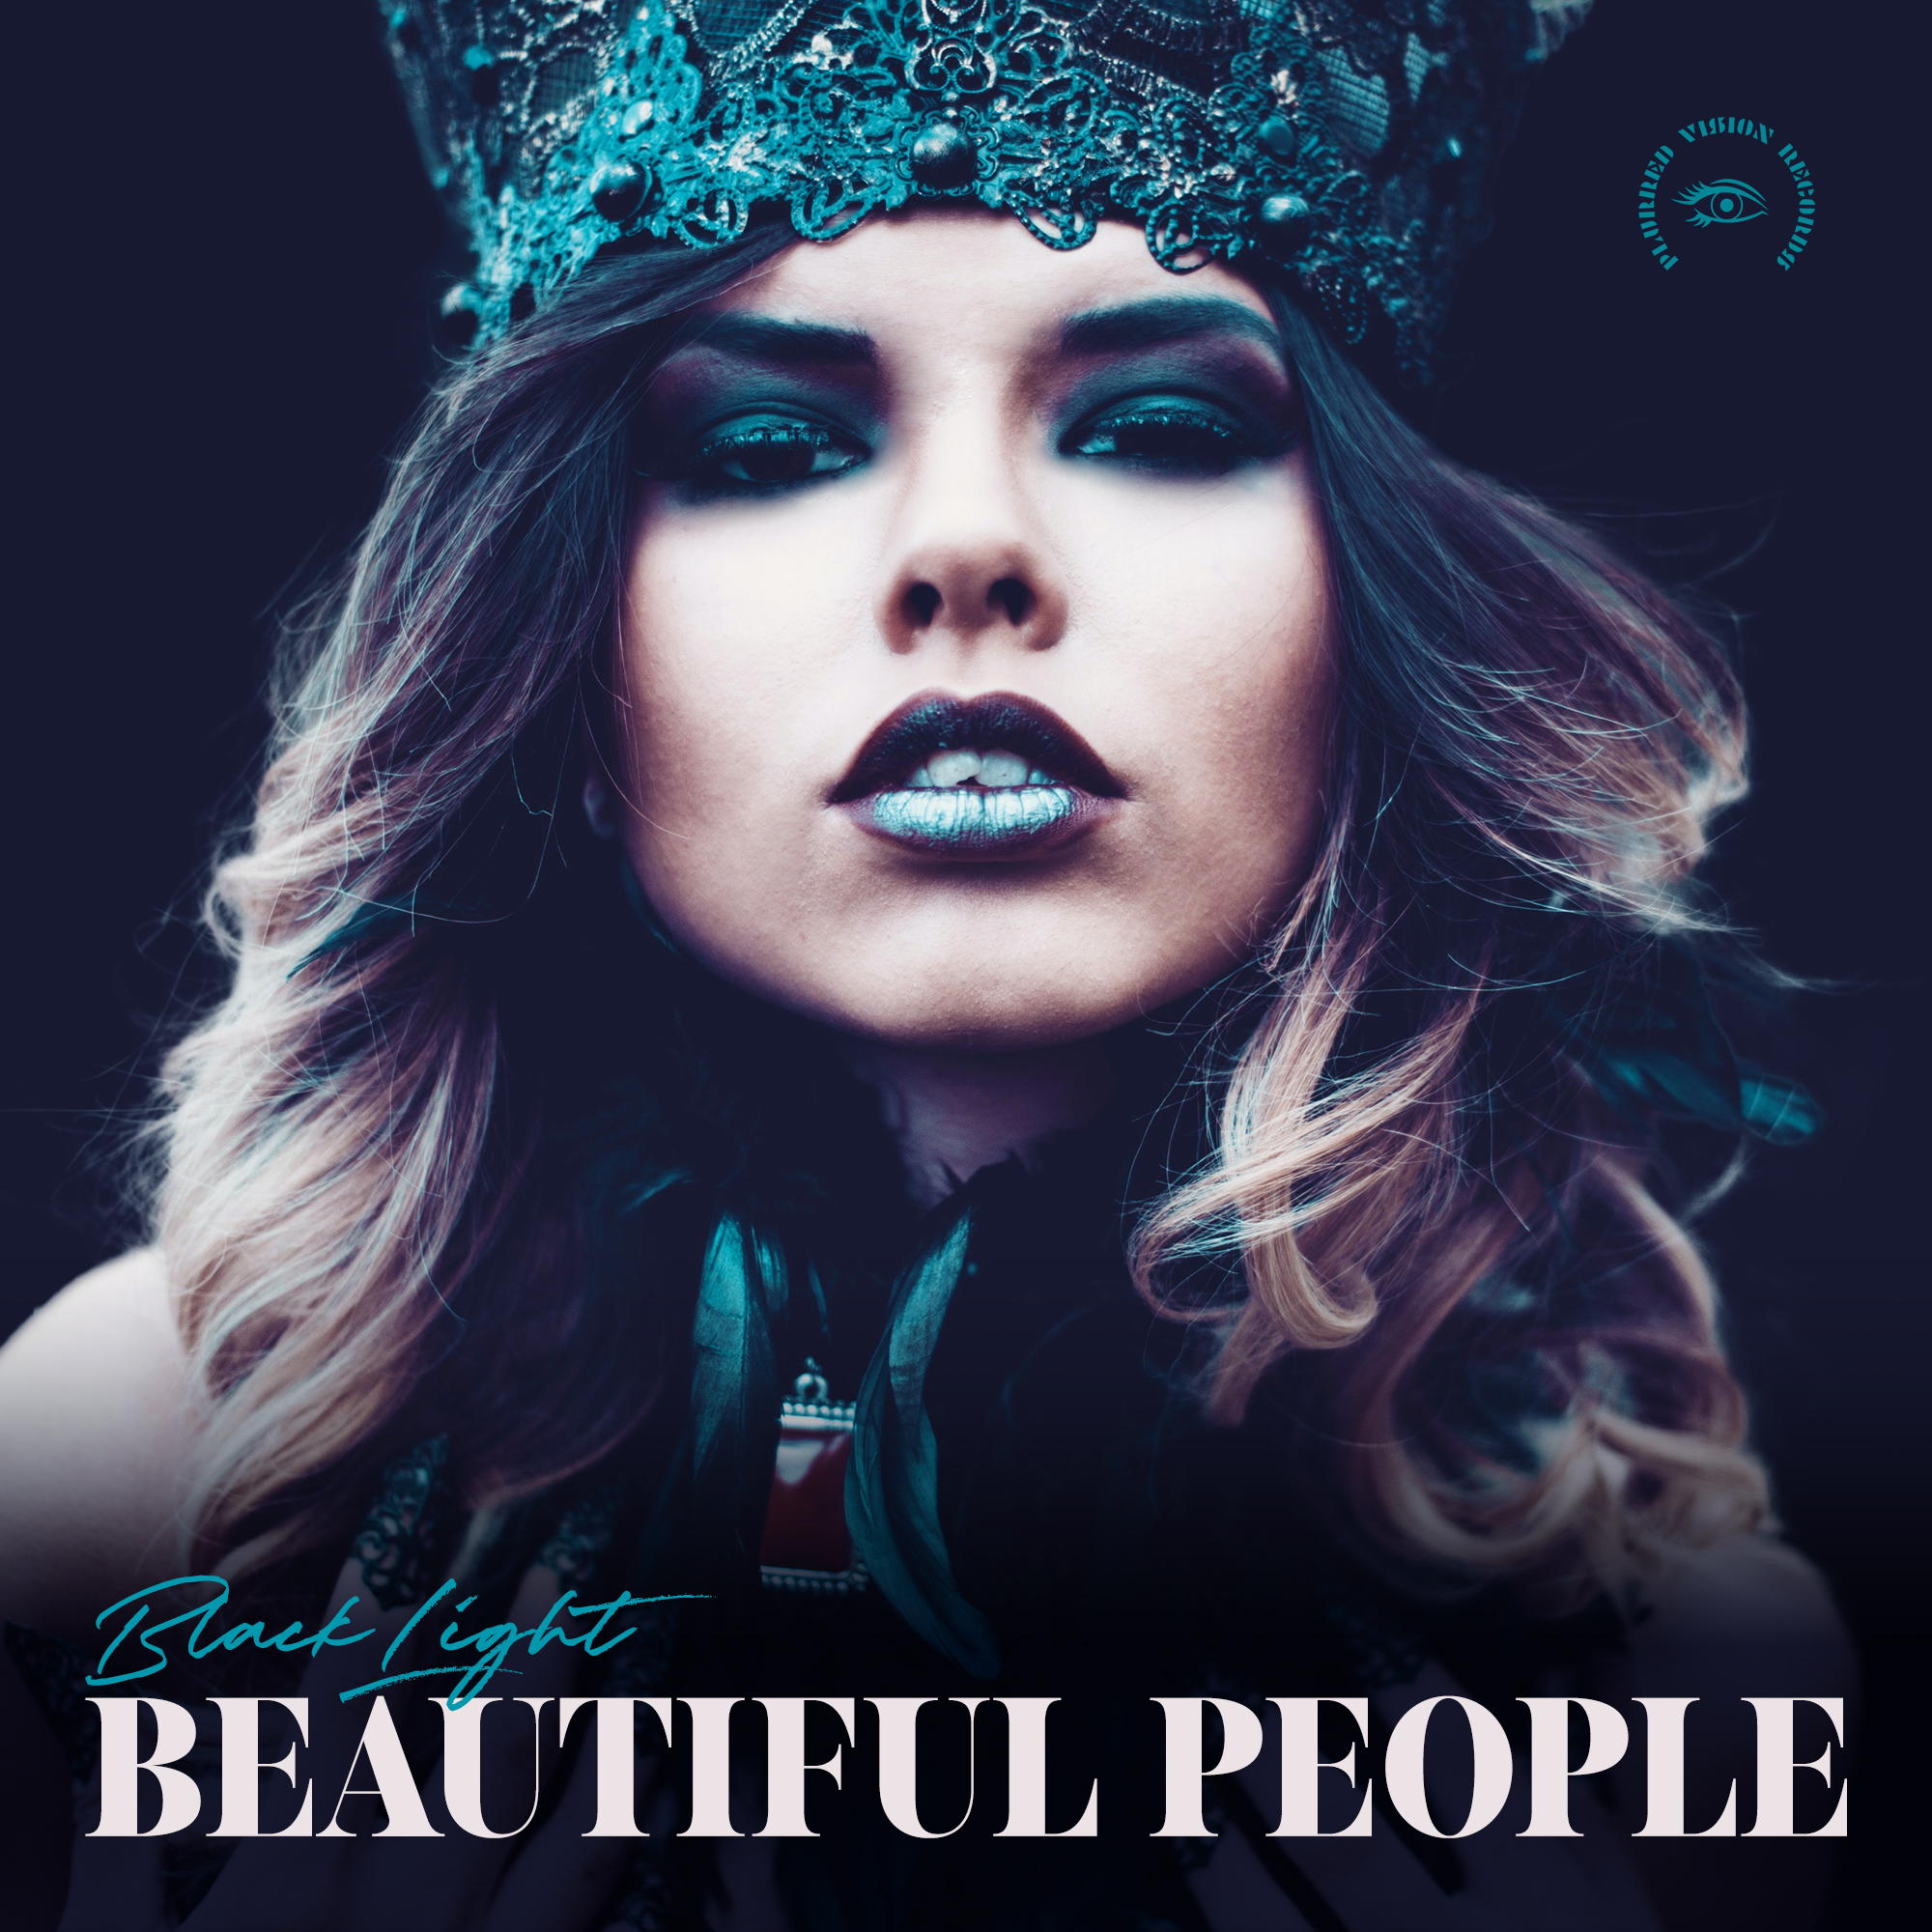 BlackLight Calls On “Beautiful People” In Latest Single